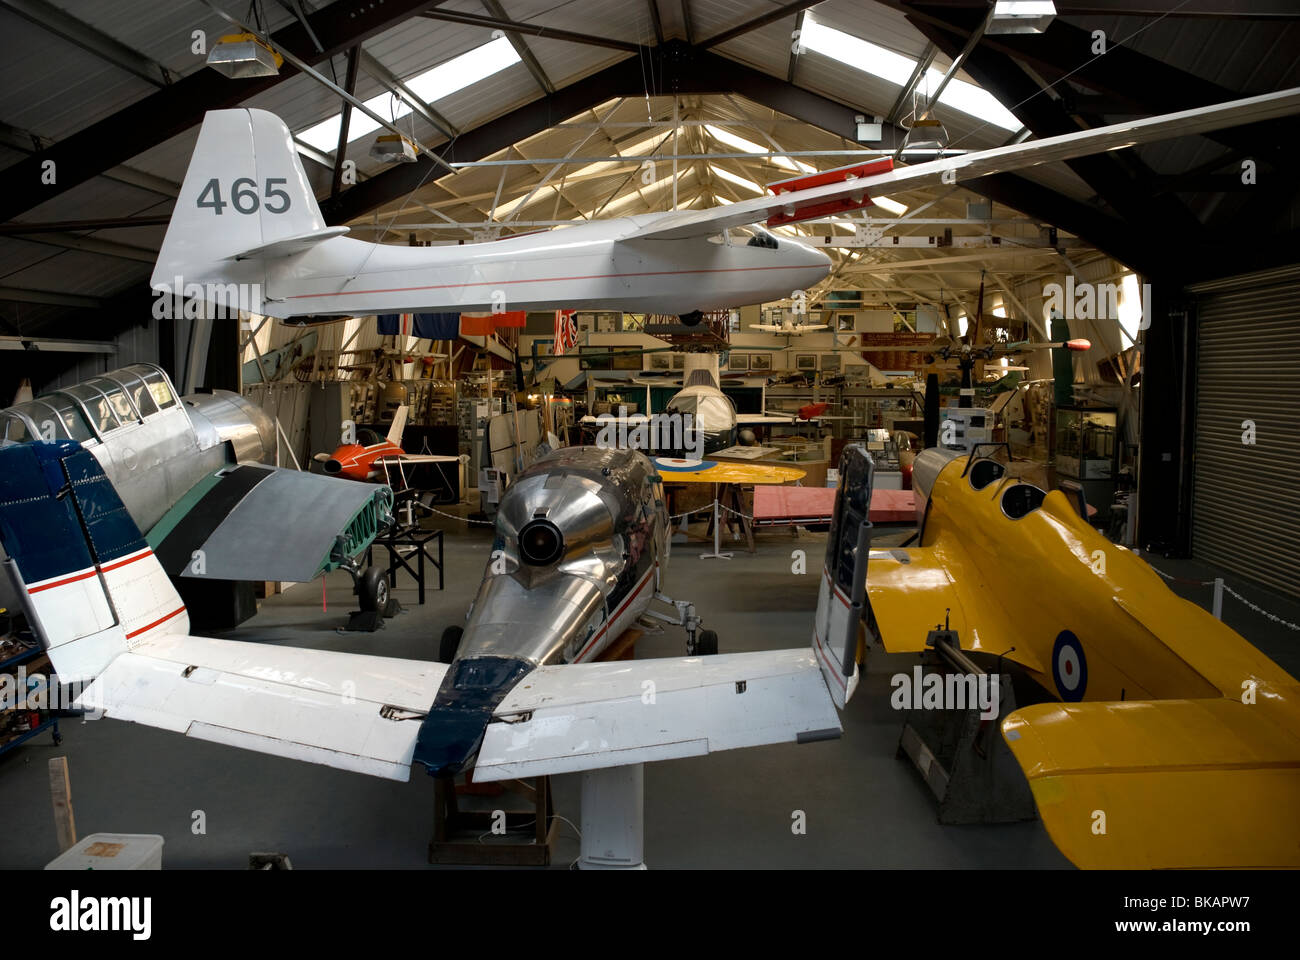 berkshire aircraft museum Stock Photo